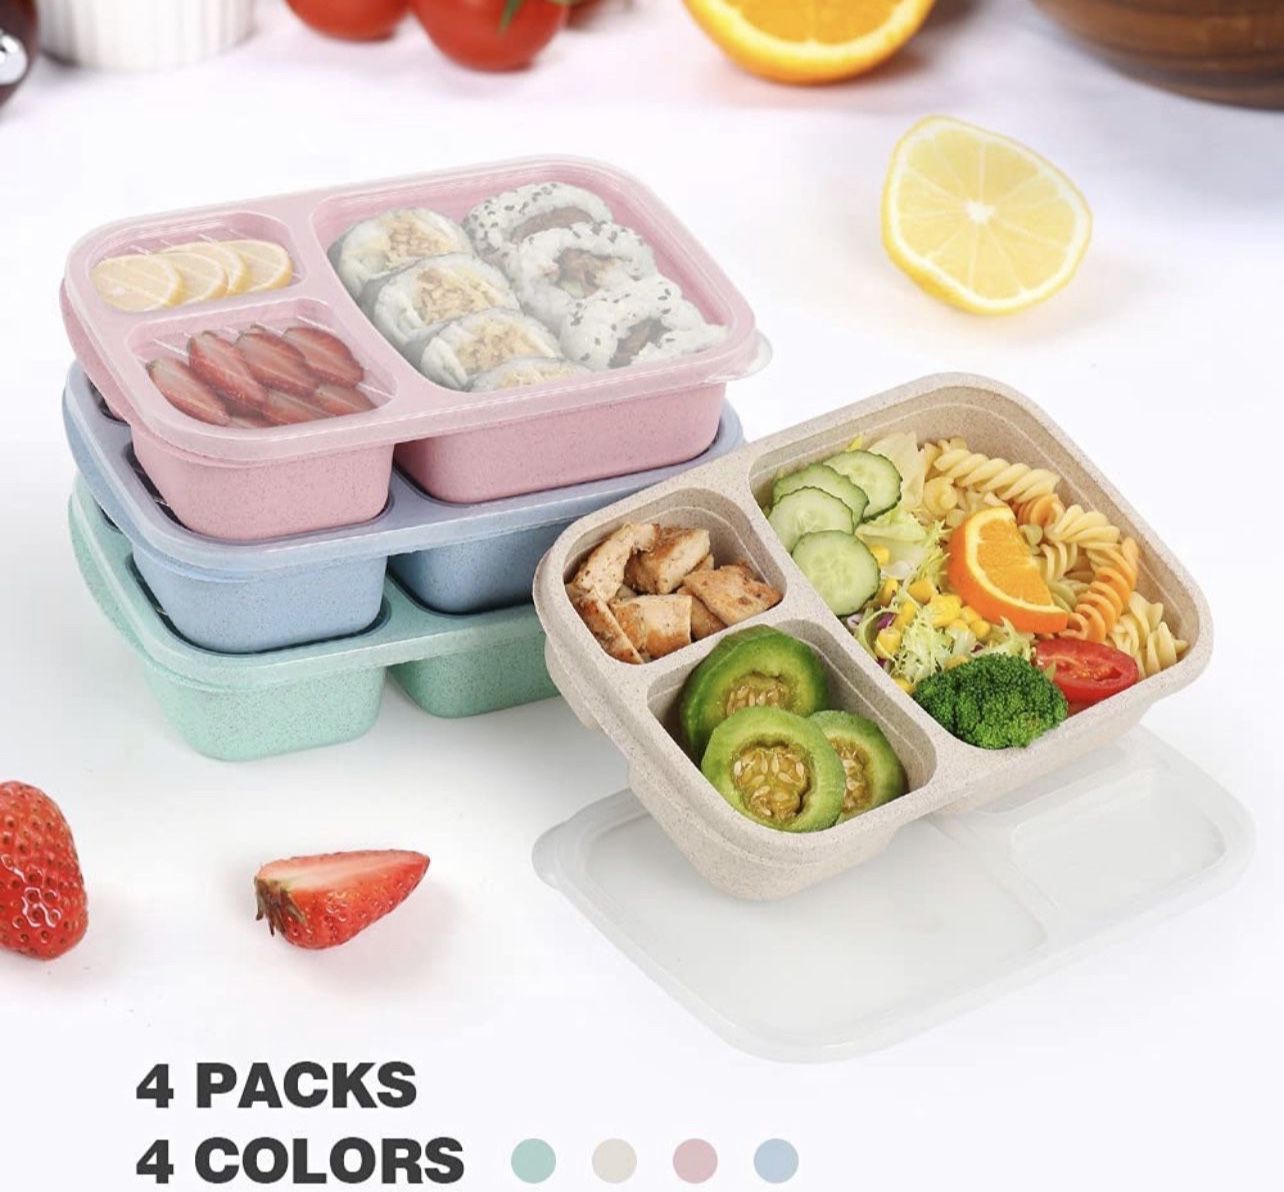 PUiKUS 4 Pack Bento Box Adult, Reusable Lunch Box for Kids